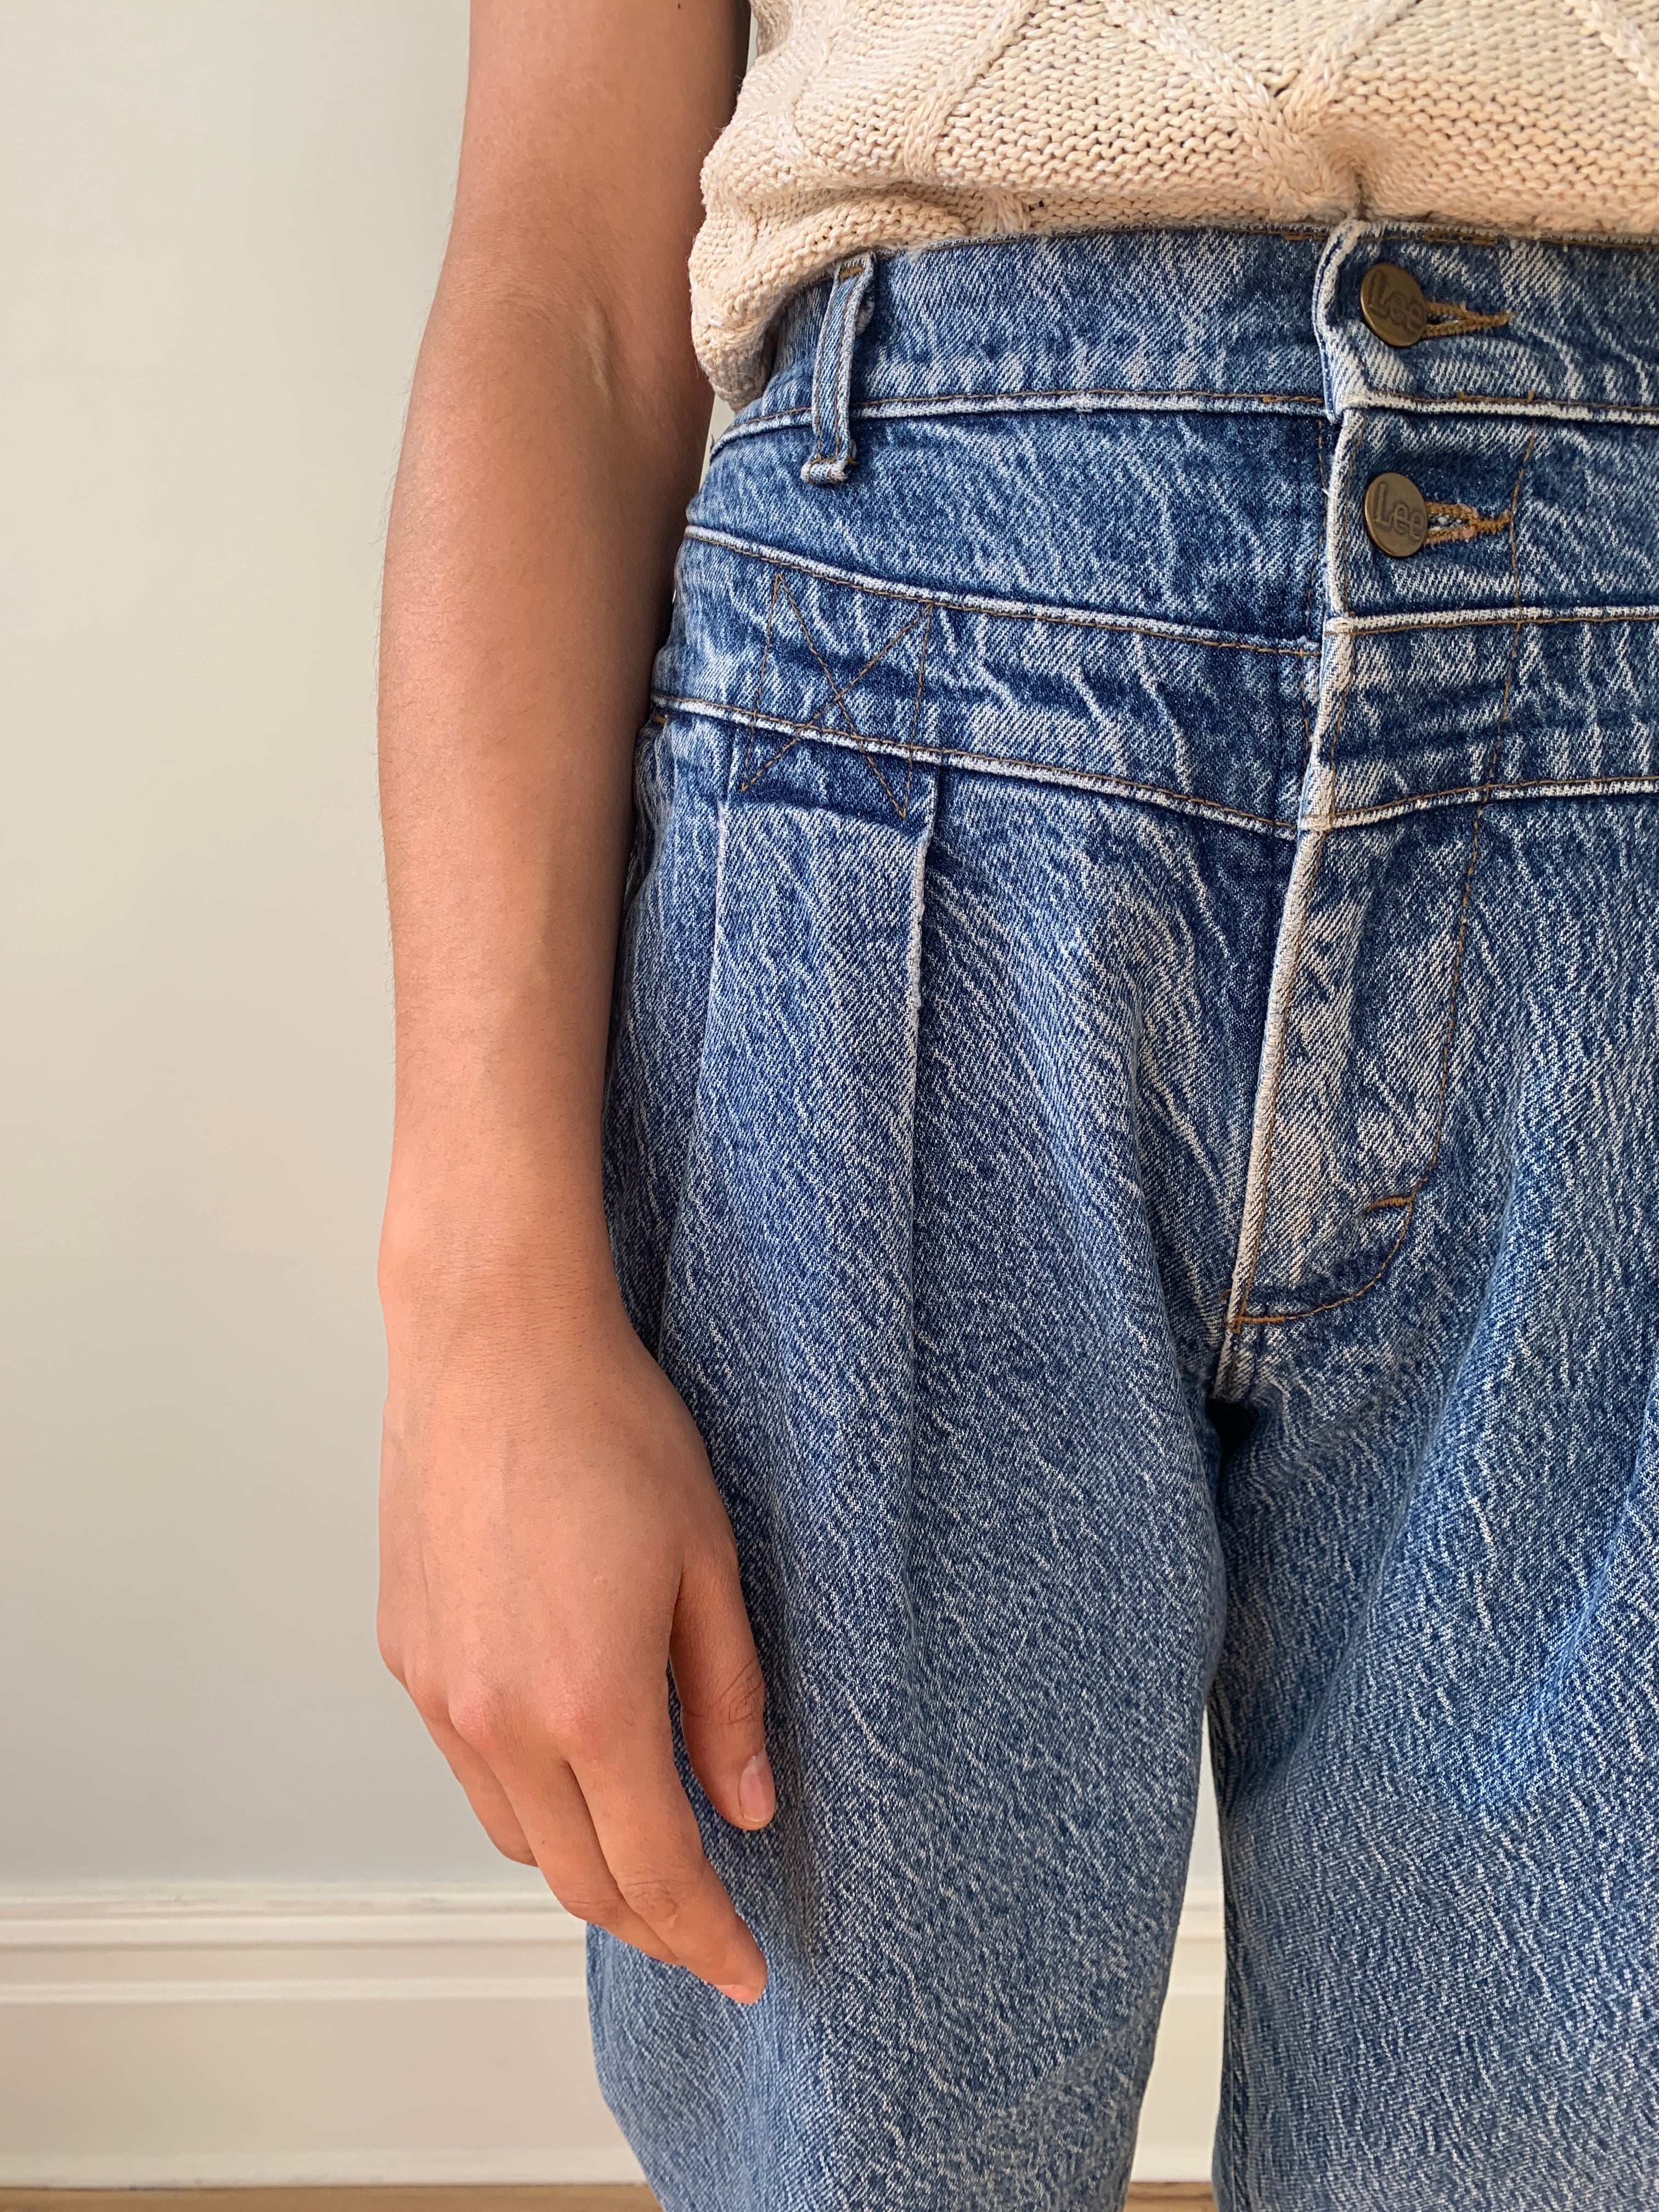 Vintage 1980's Lee stonewash loose fit jeans